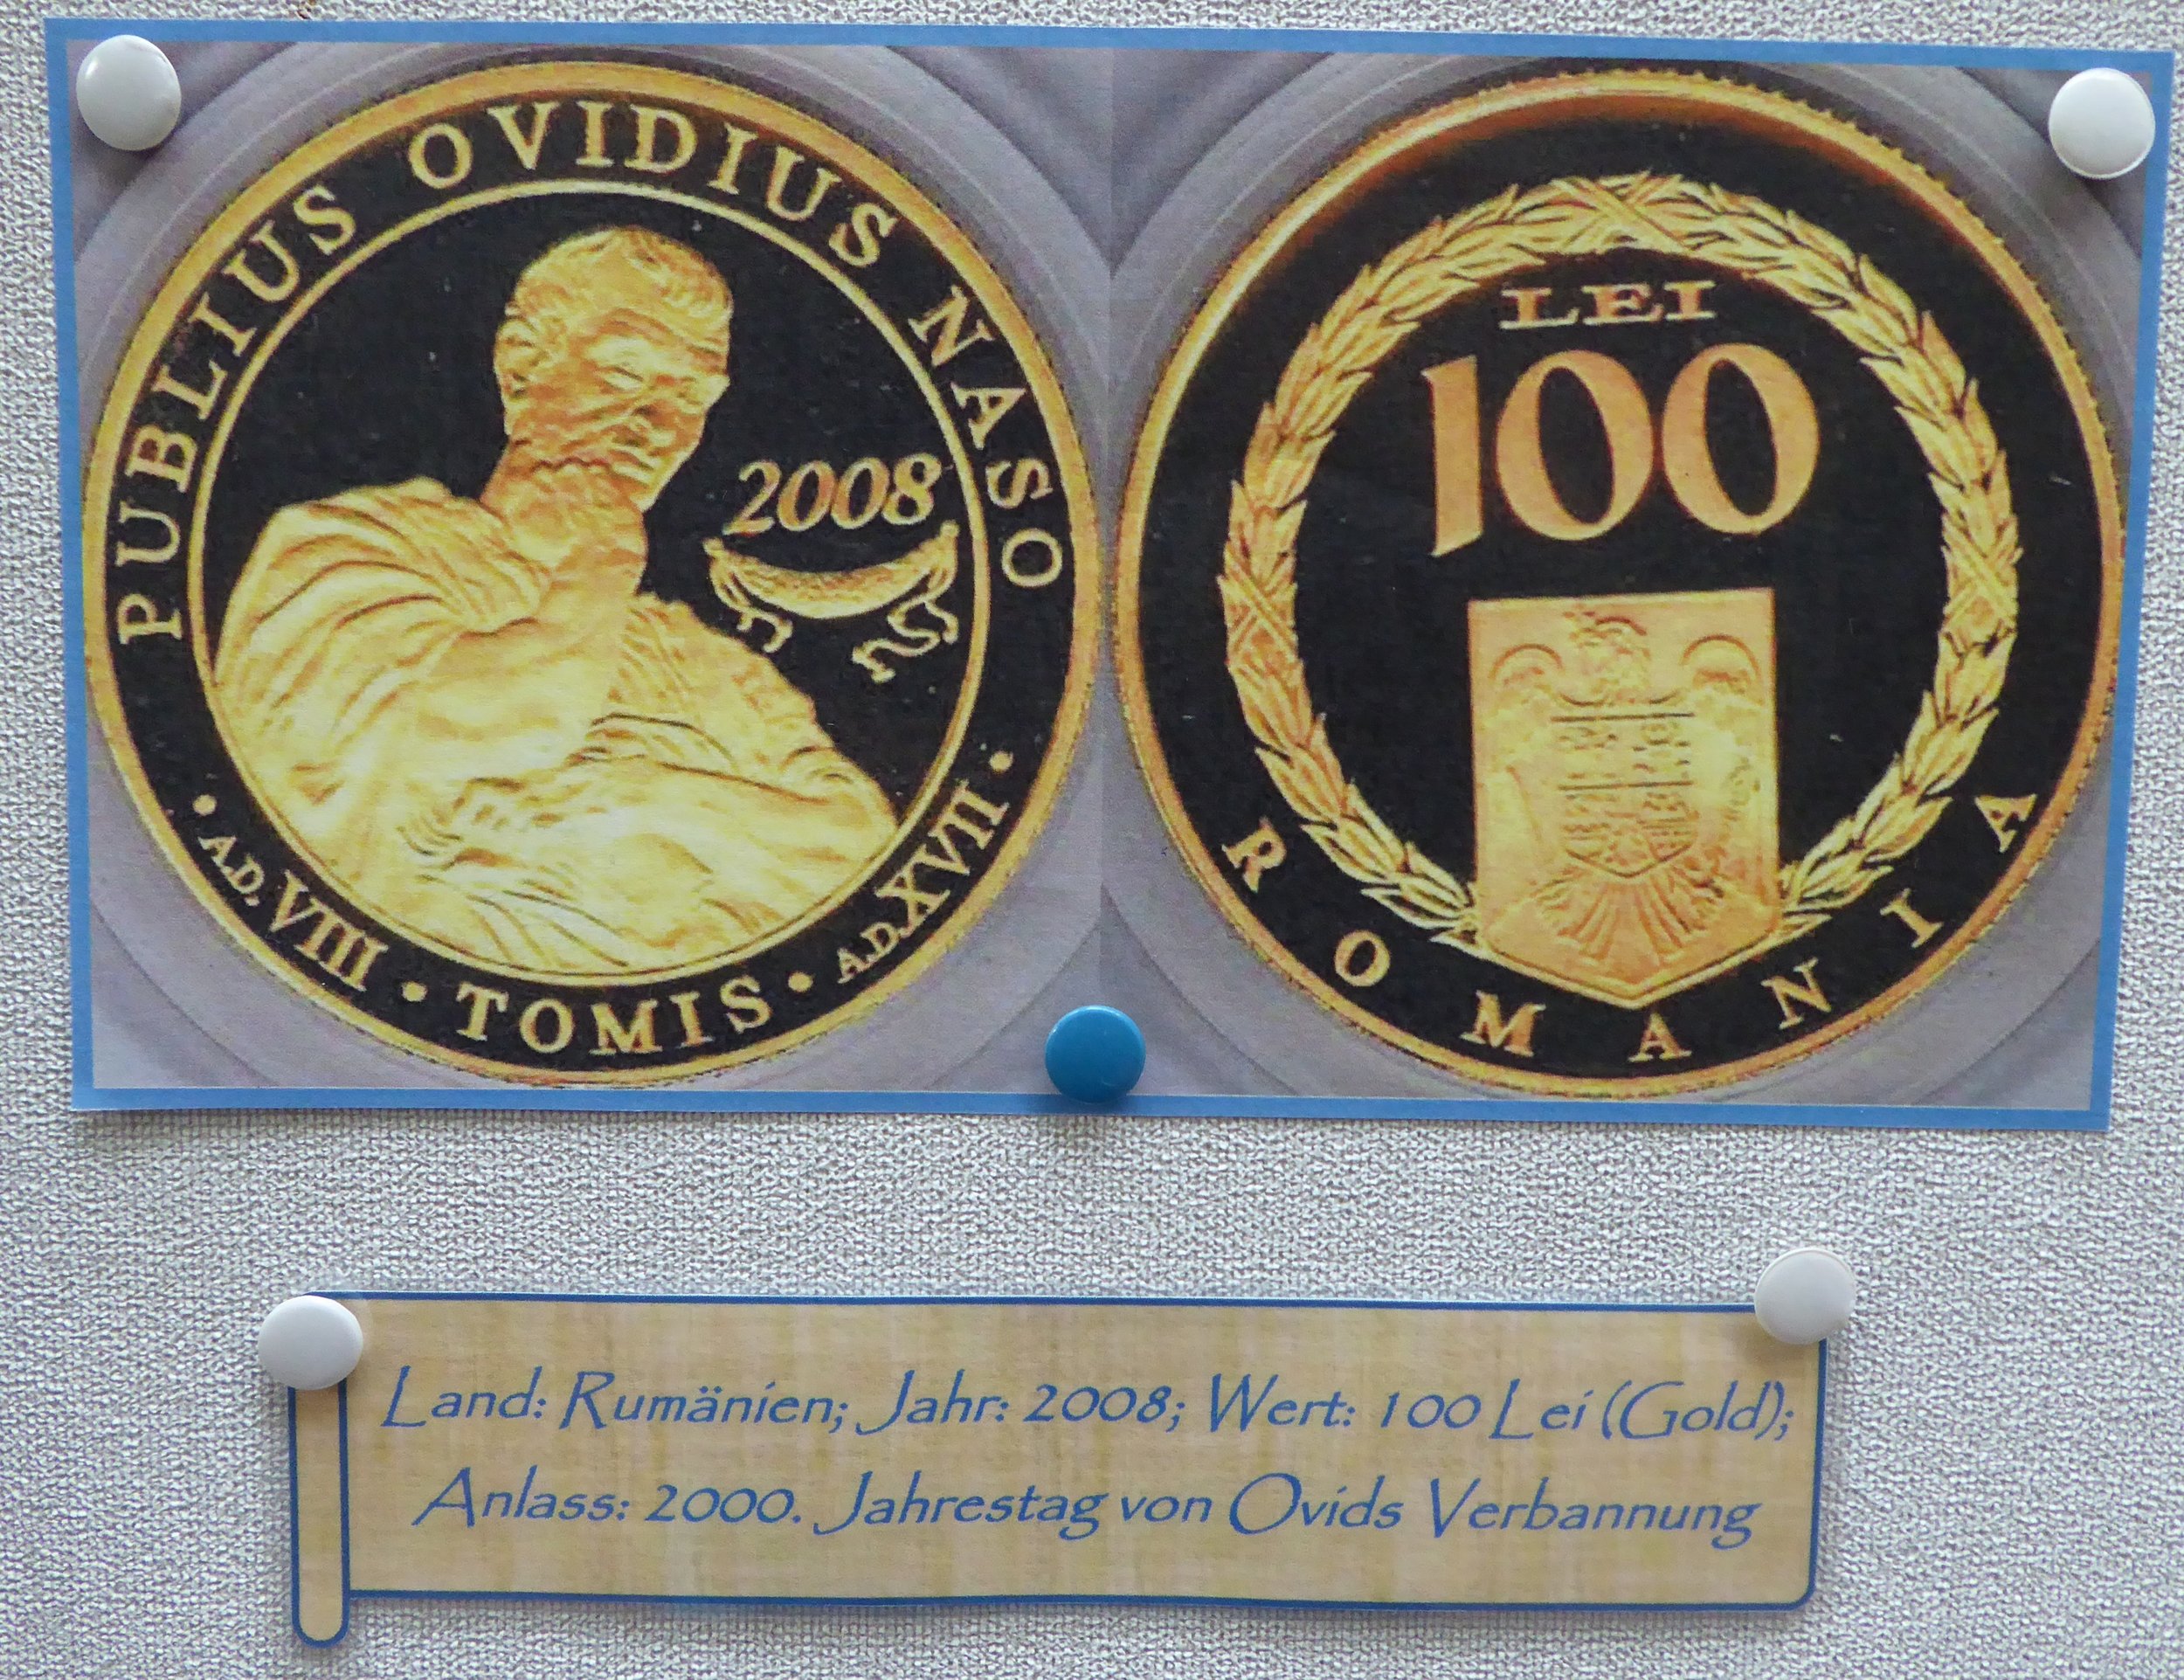 Ovid - Münze 1.JPG